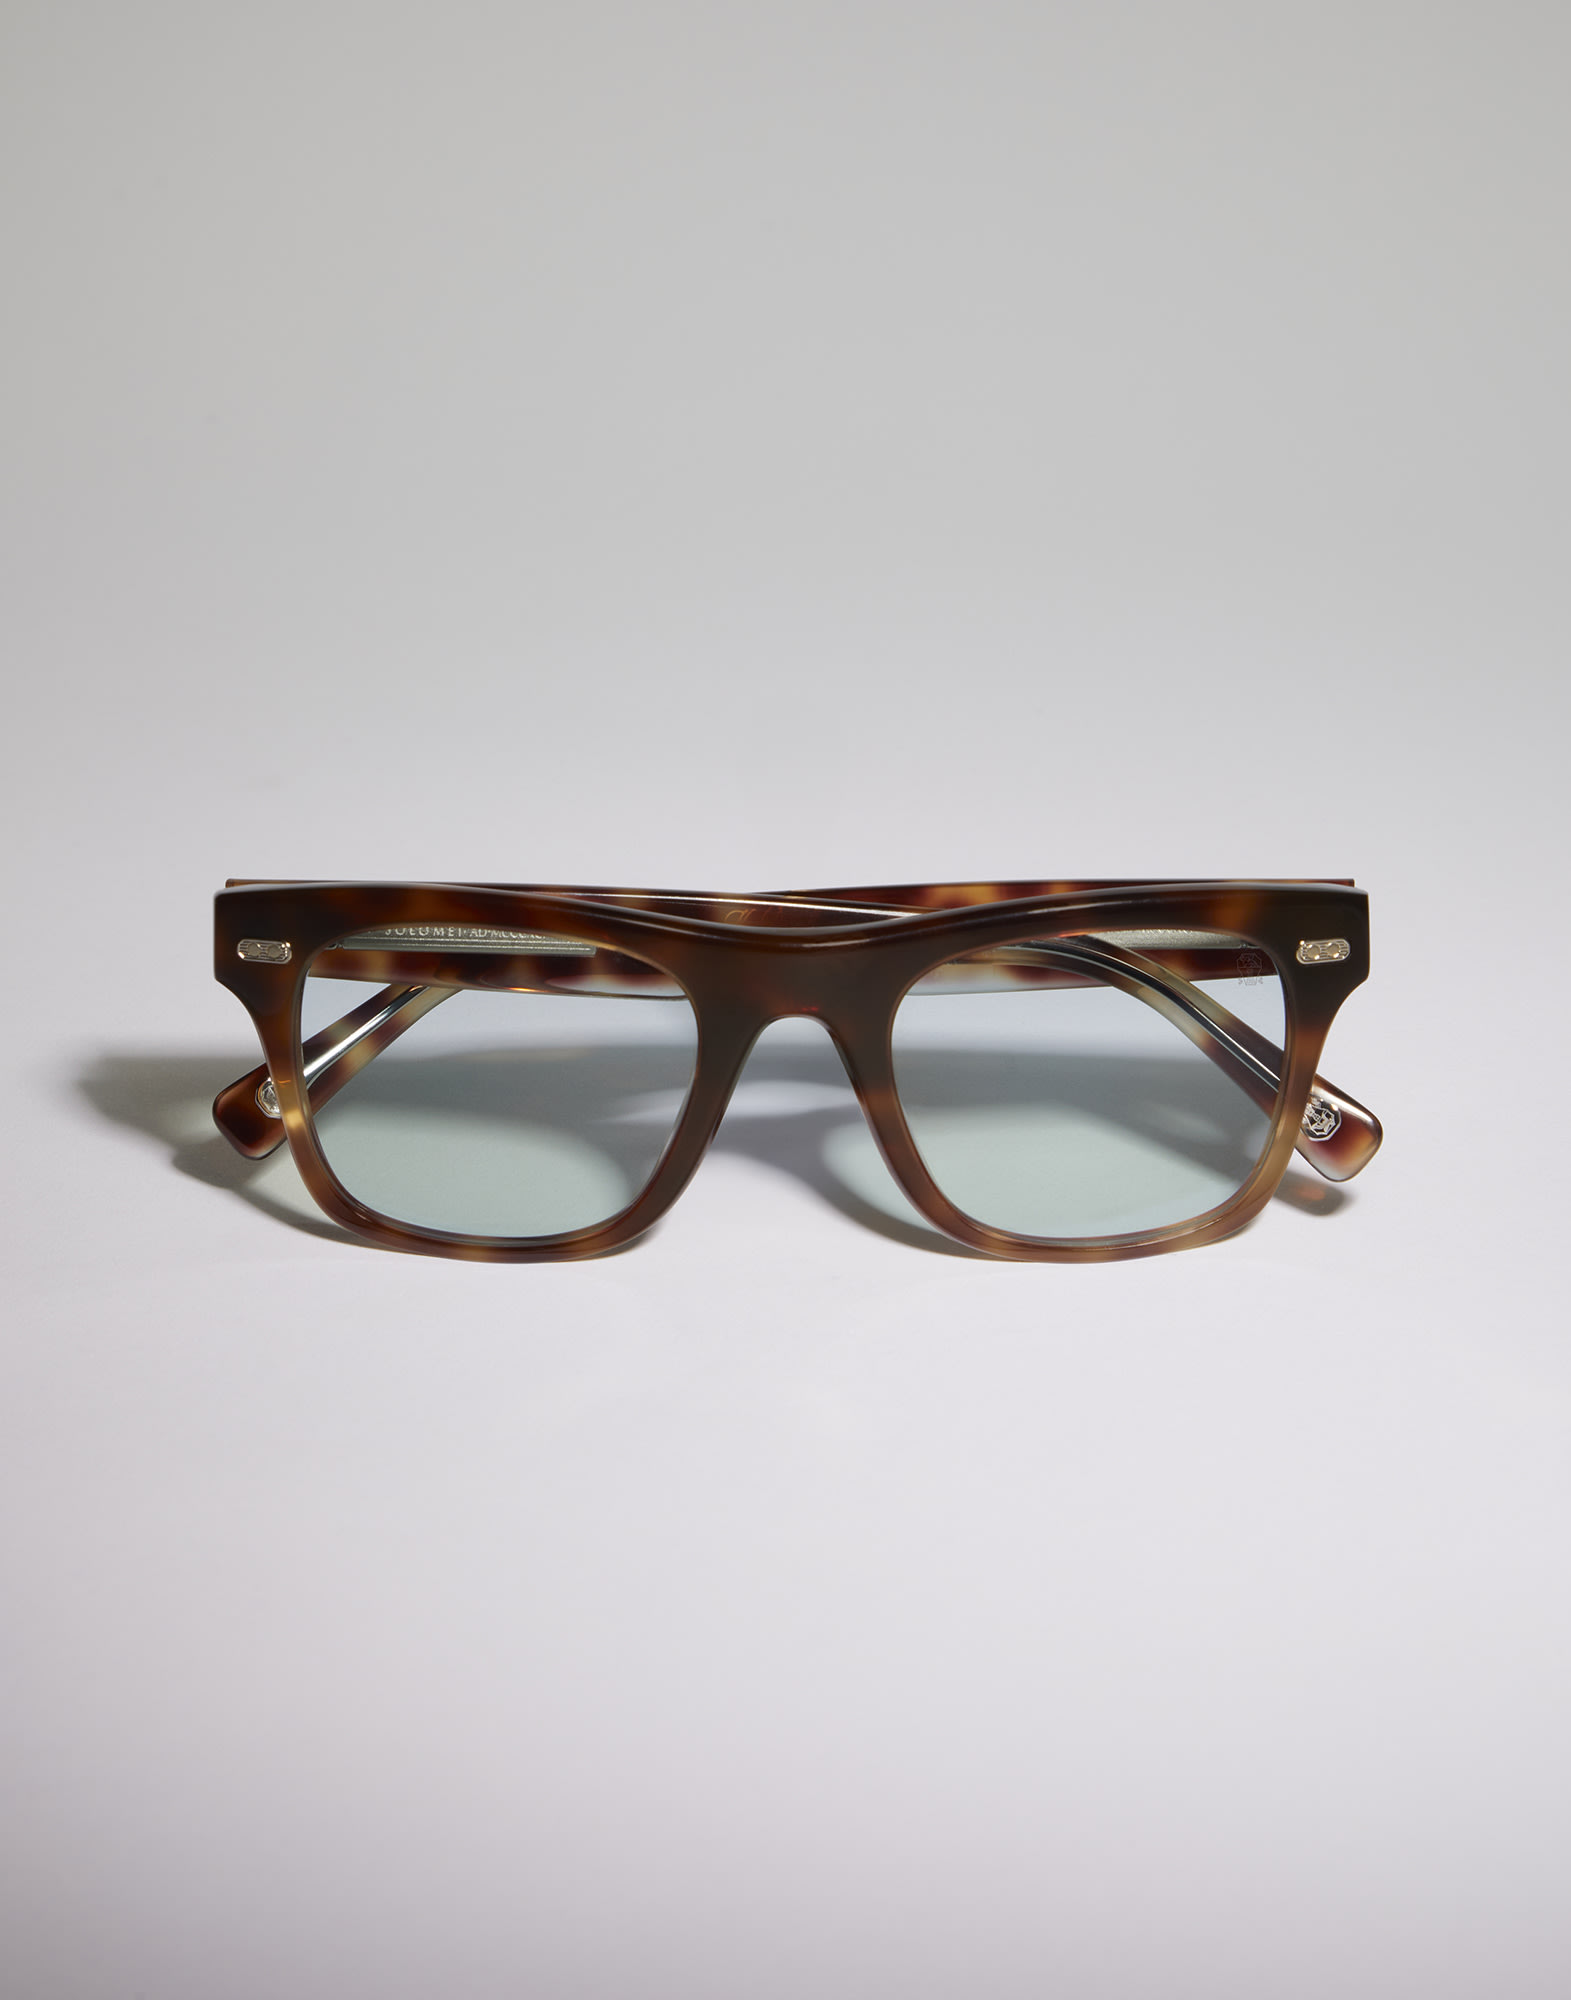 Mr. Brunello con lentes fotocromáticas Habana Hiedra Gafas -
                        Brunello Cucinelli
                    